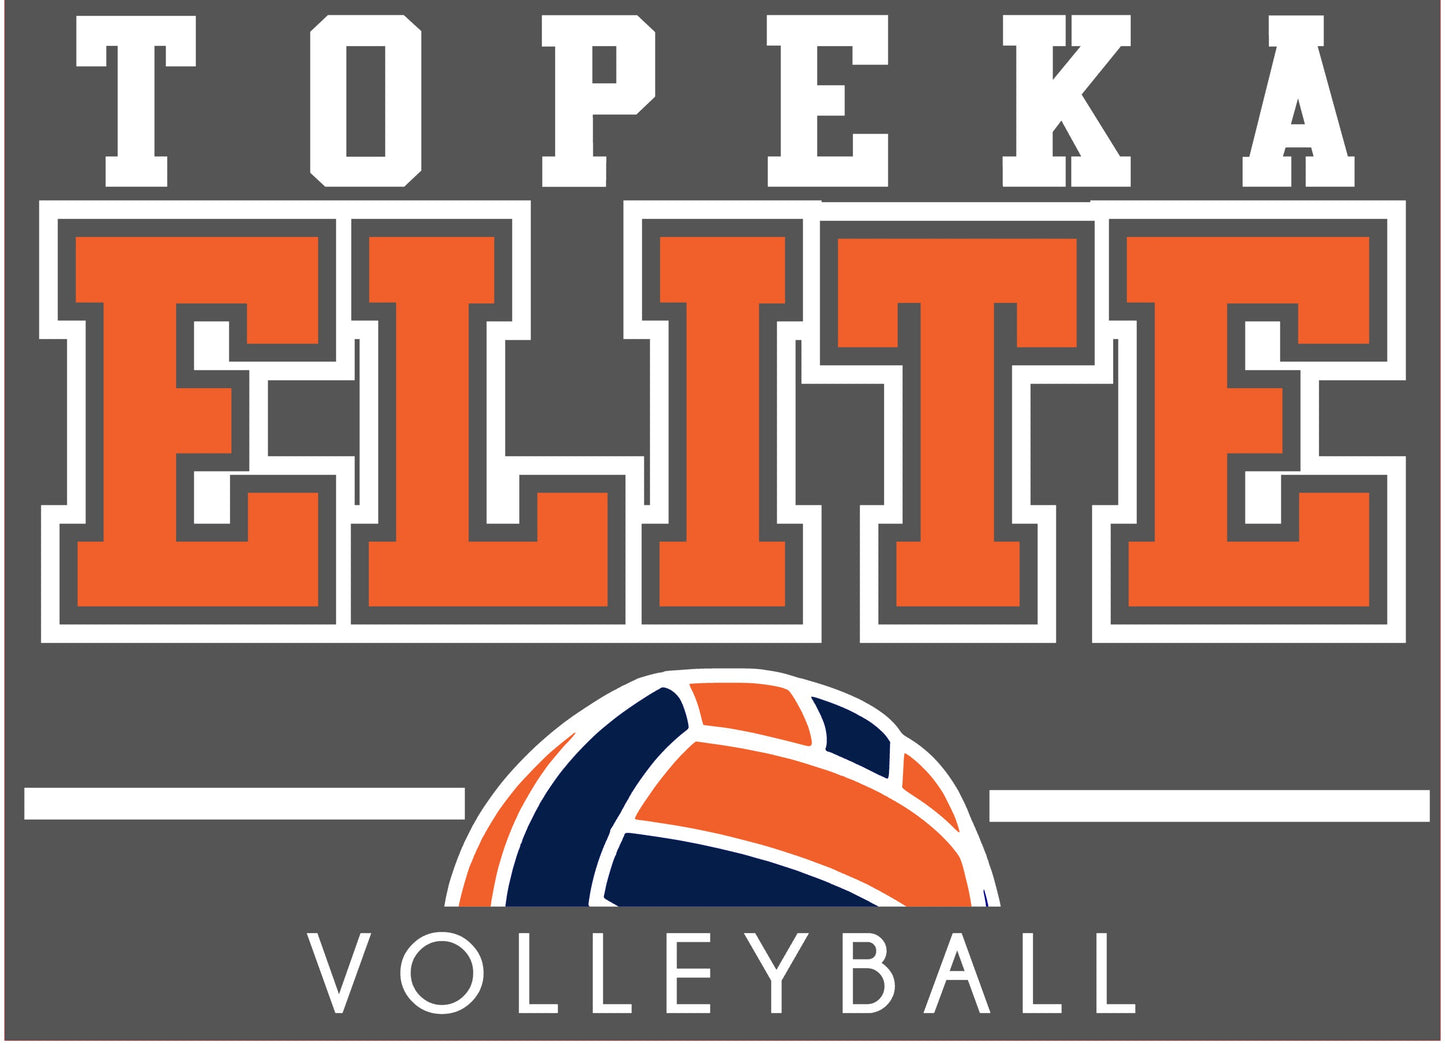 Topeka Elite Volleyball Block -